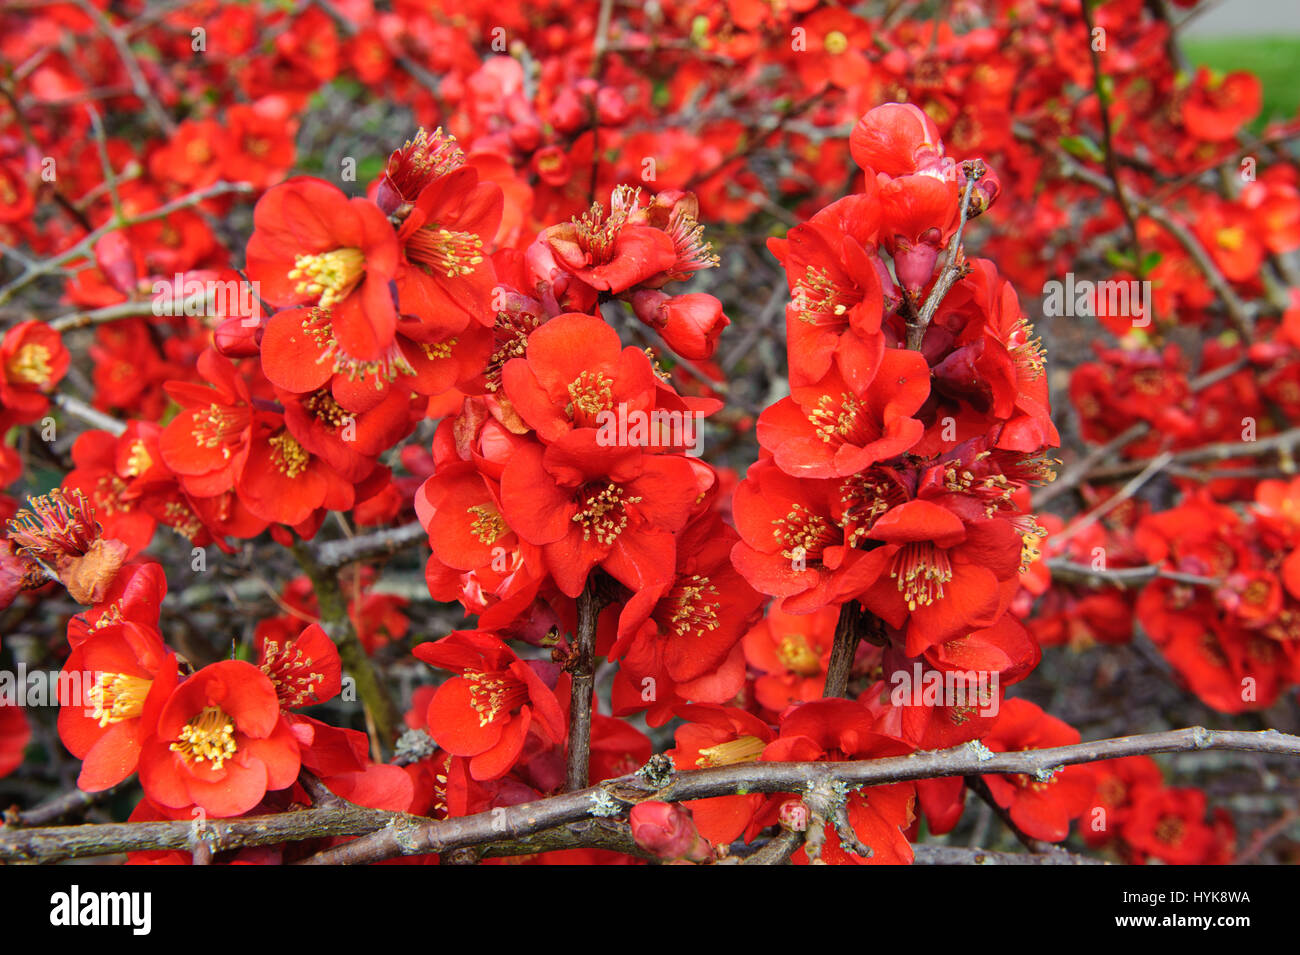 Chaenomeles speciosa 'Incendie' Japanese flowering quince cultivar hardy shrub red flowers spring flower blossom Stock Photo